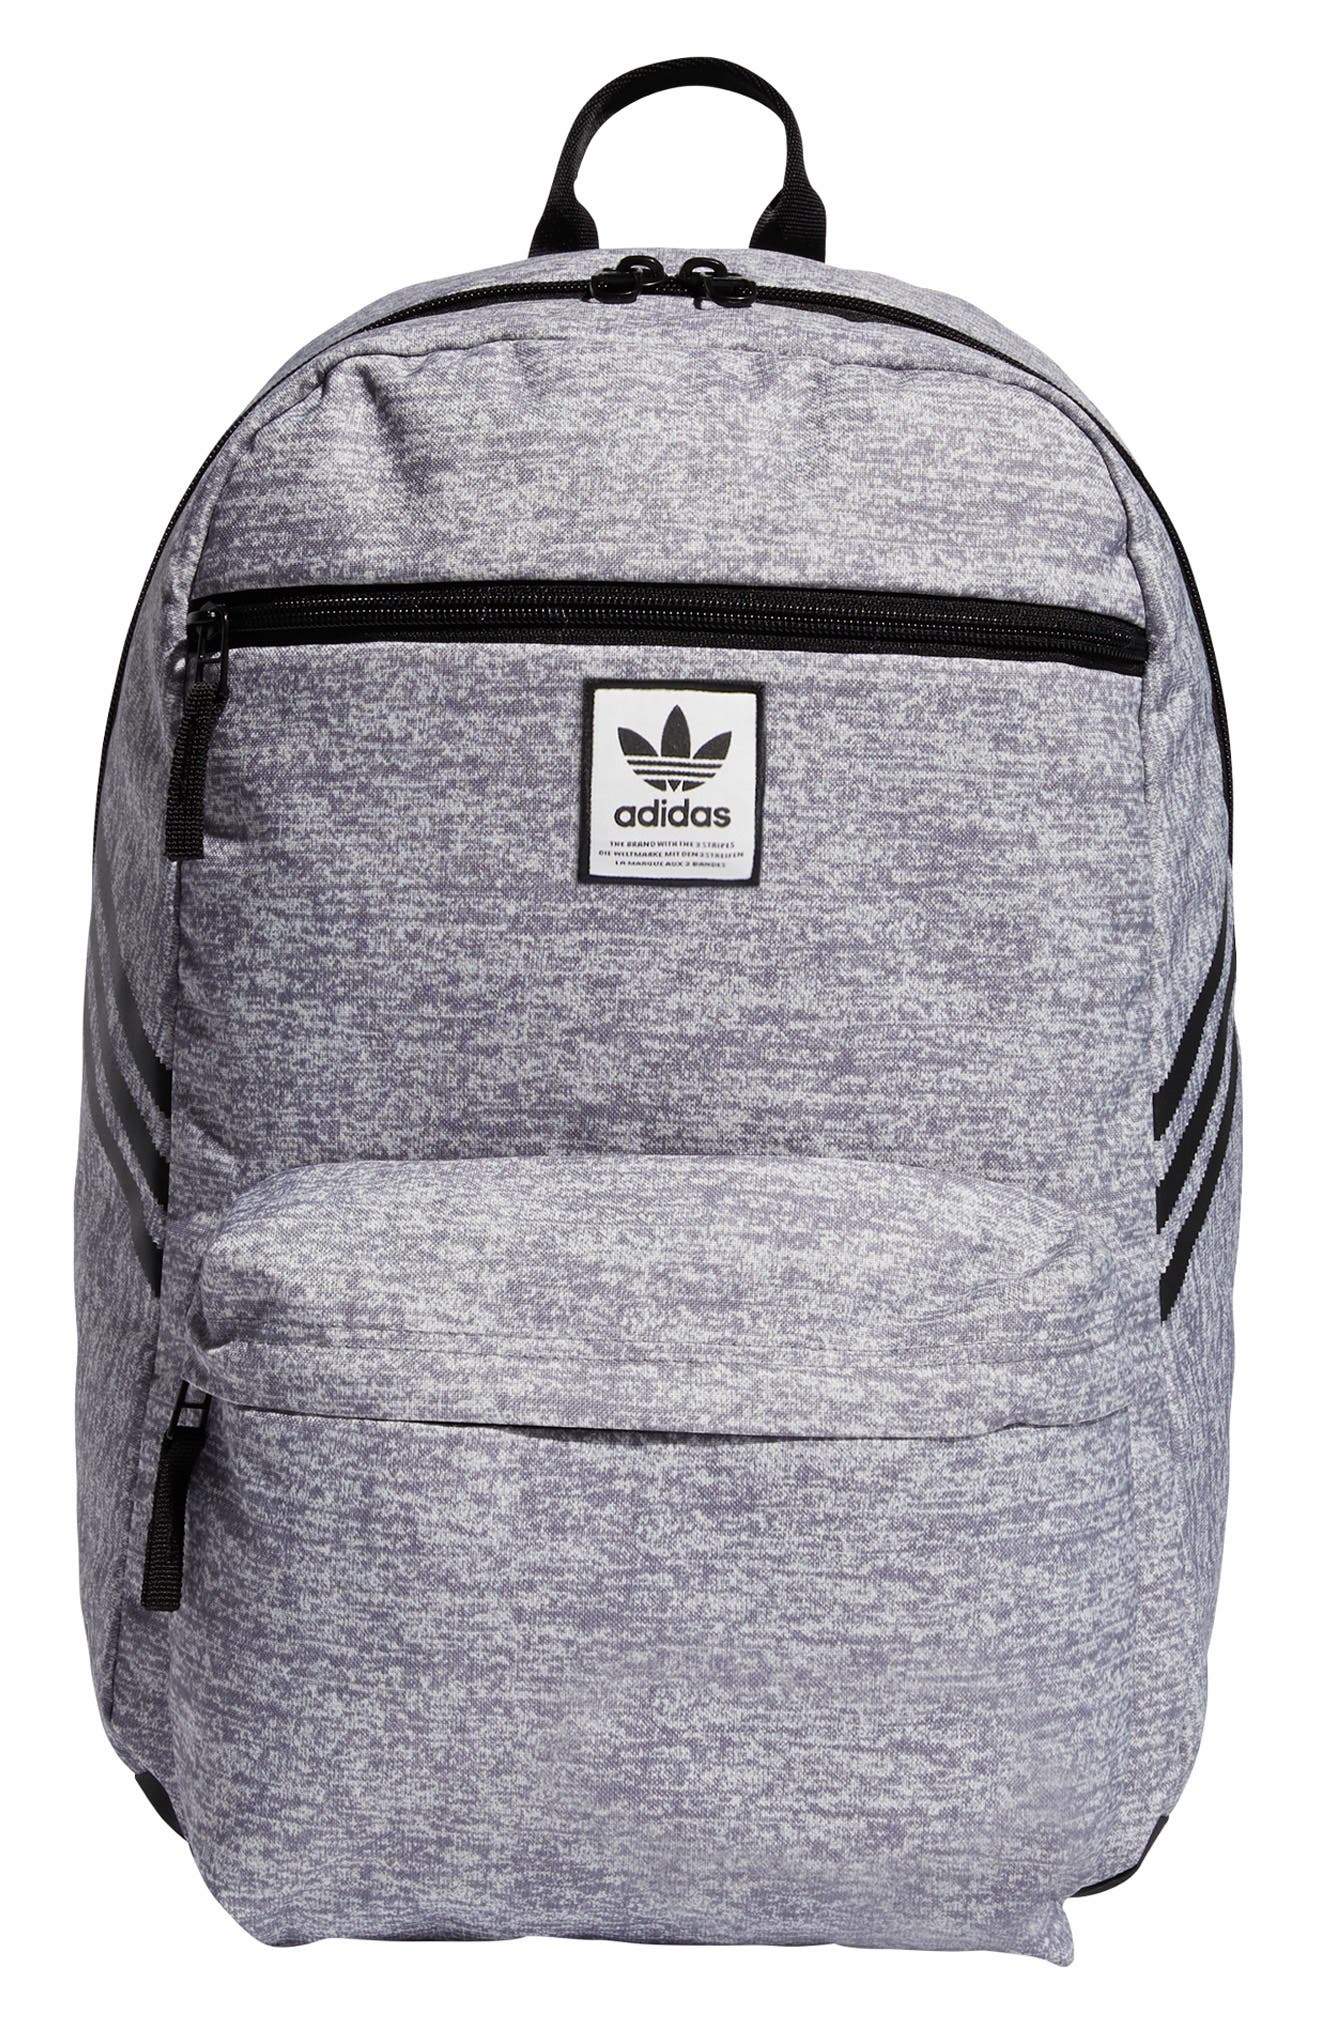 adidas Originals National 3 Stripes Backpack, $50 | Nordstrom | Lookastic